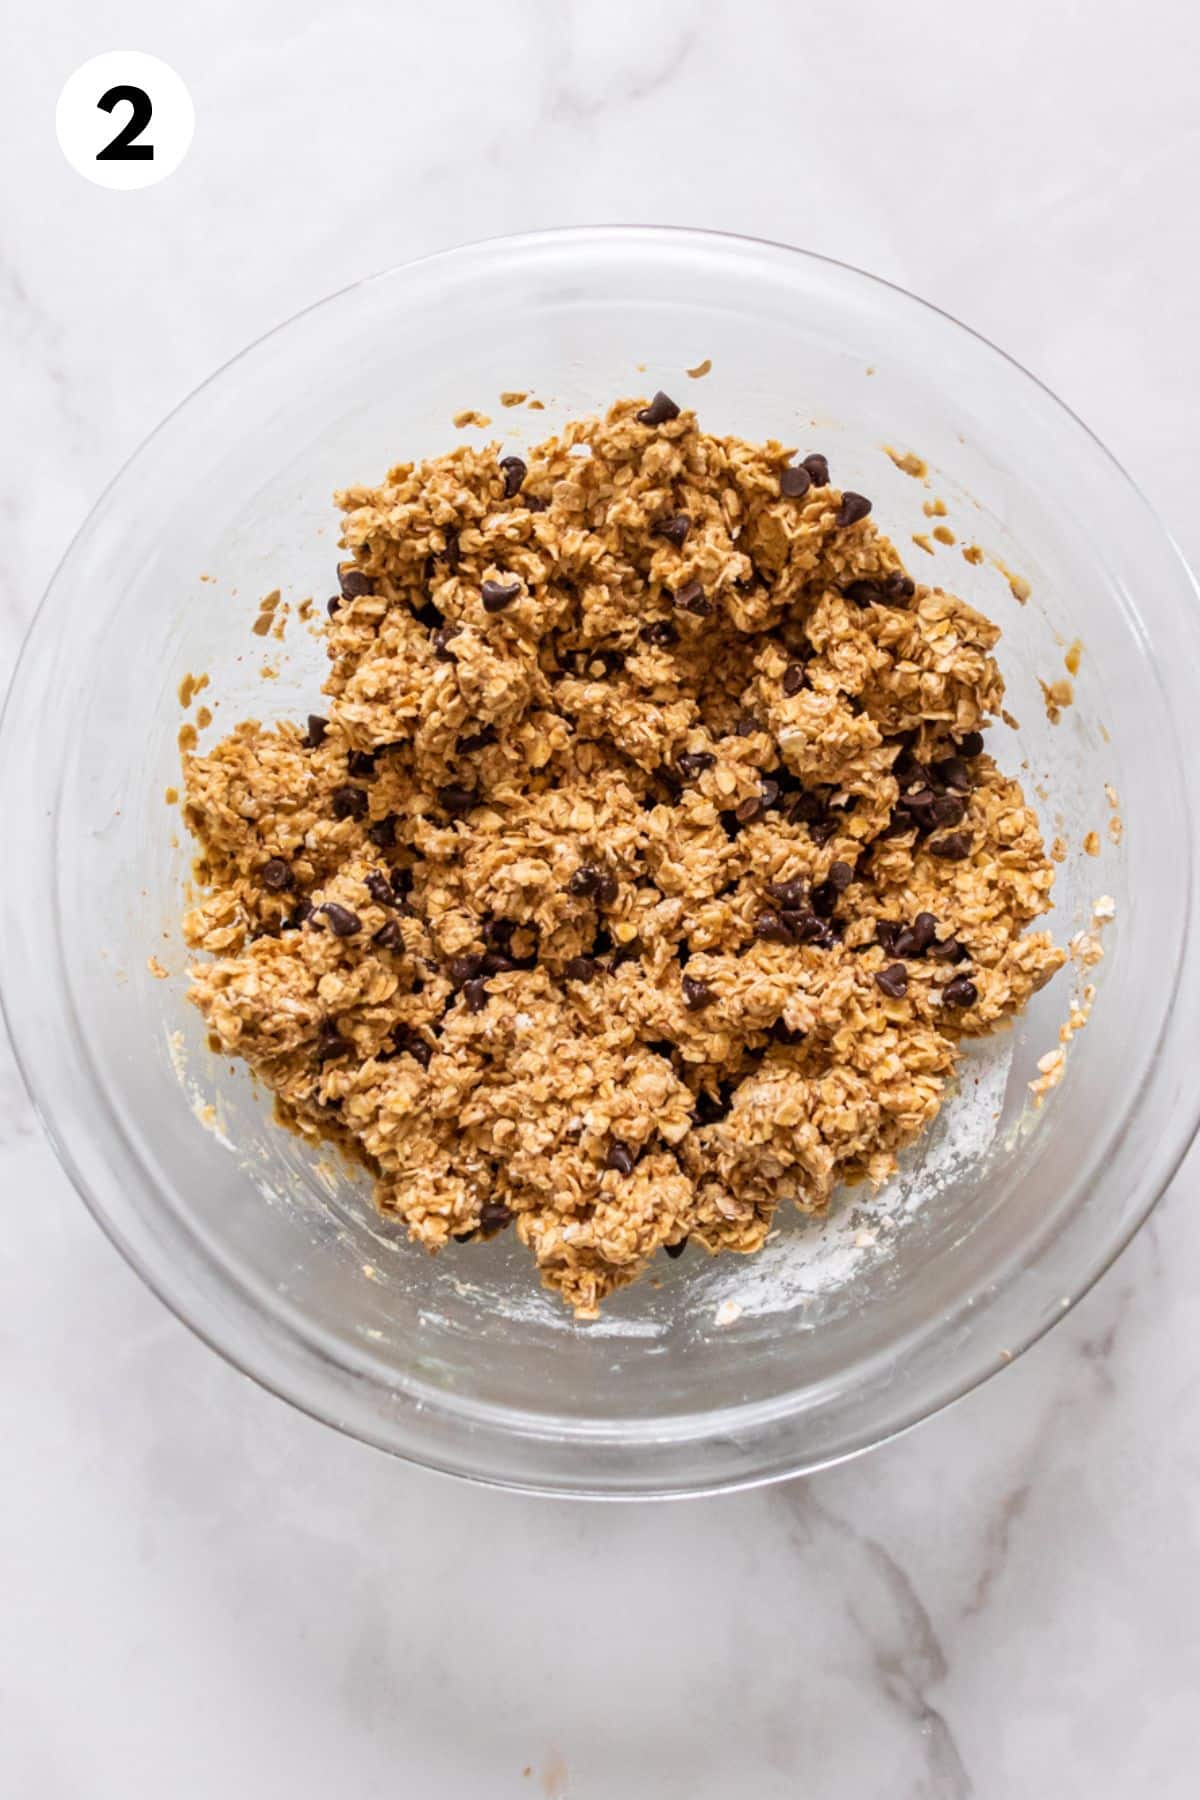 Healthy granola bar mixture in a bowl.